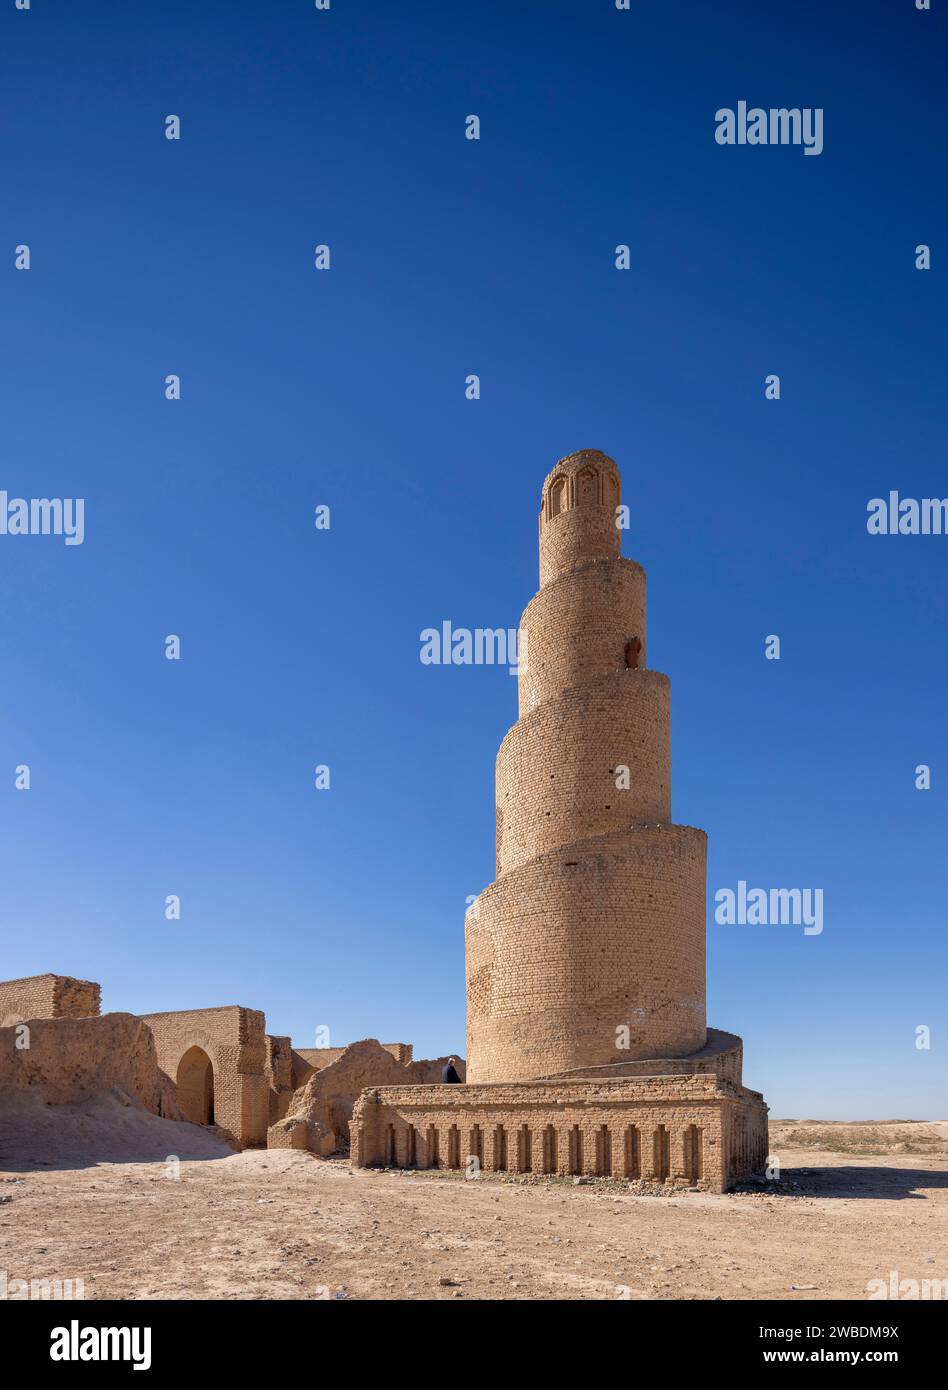 female Iraqi tourist climbing the minaret of the 9th century Abbasid Abu Dulaf Mosque, Samarra, Iraq Stock Photo